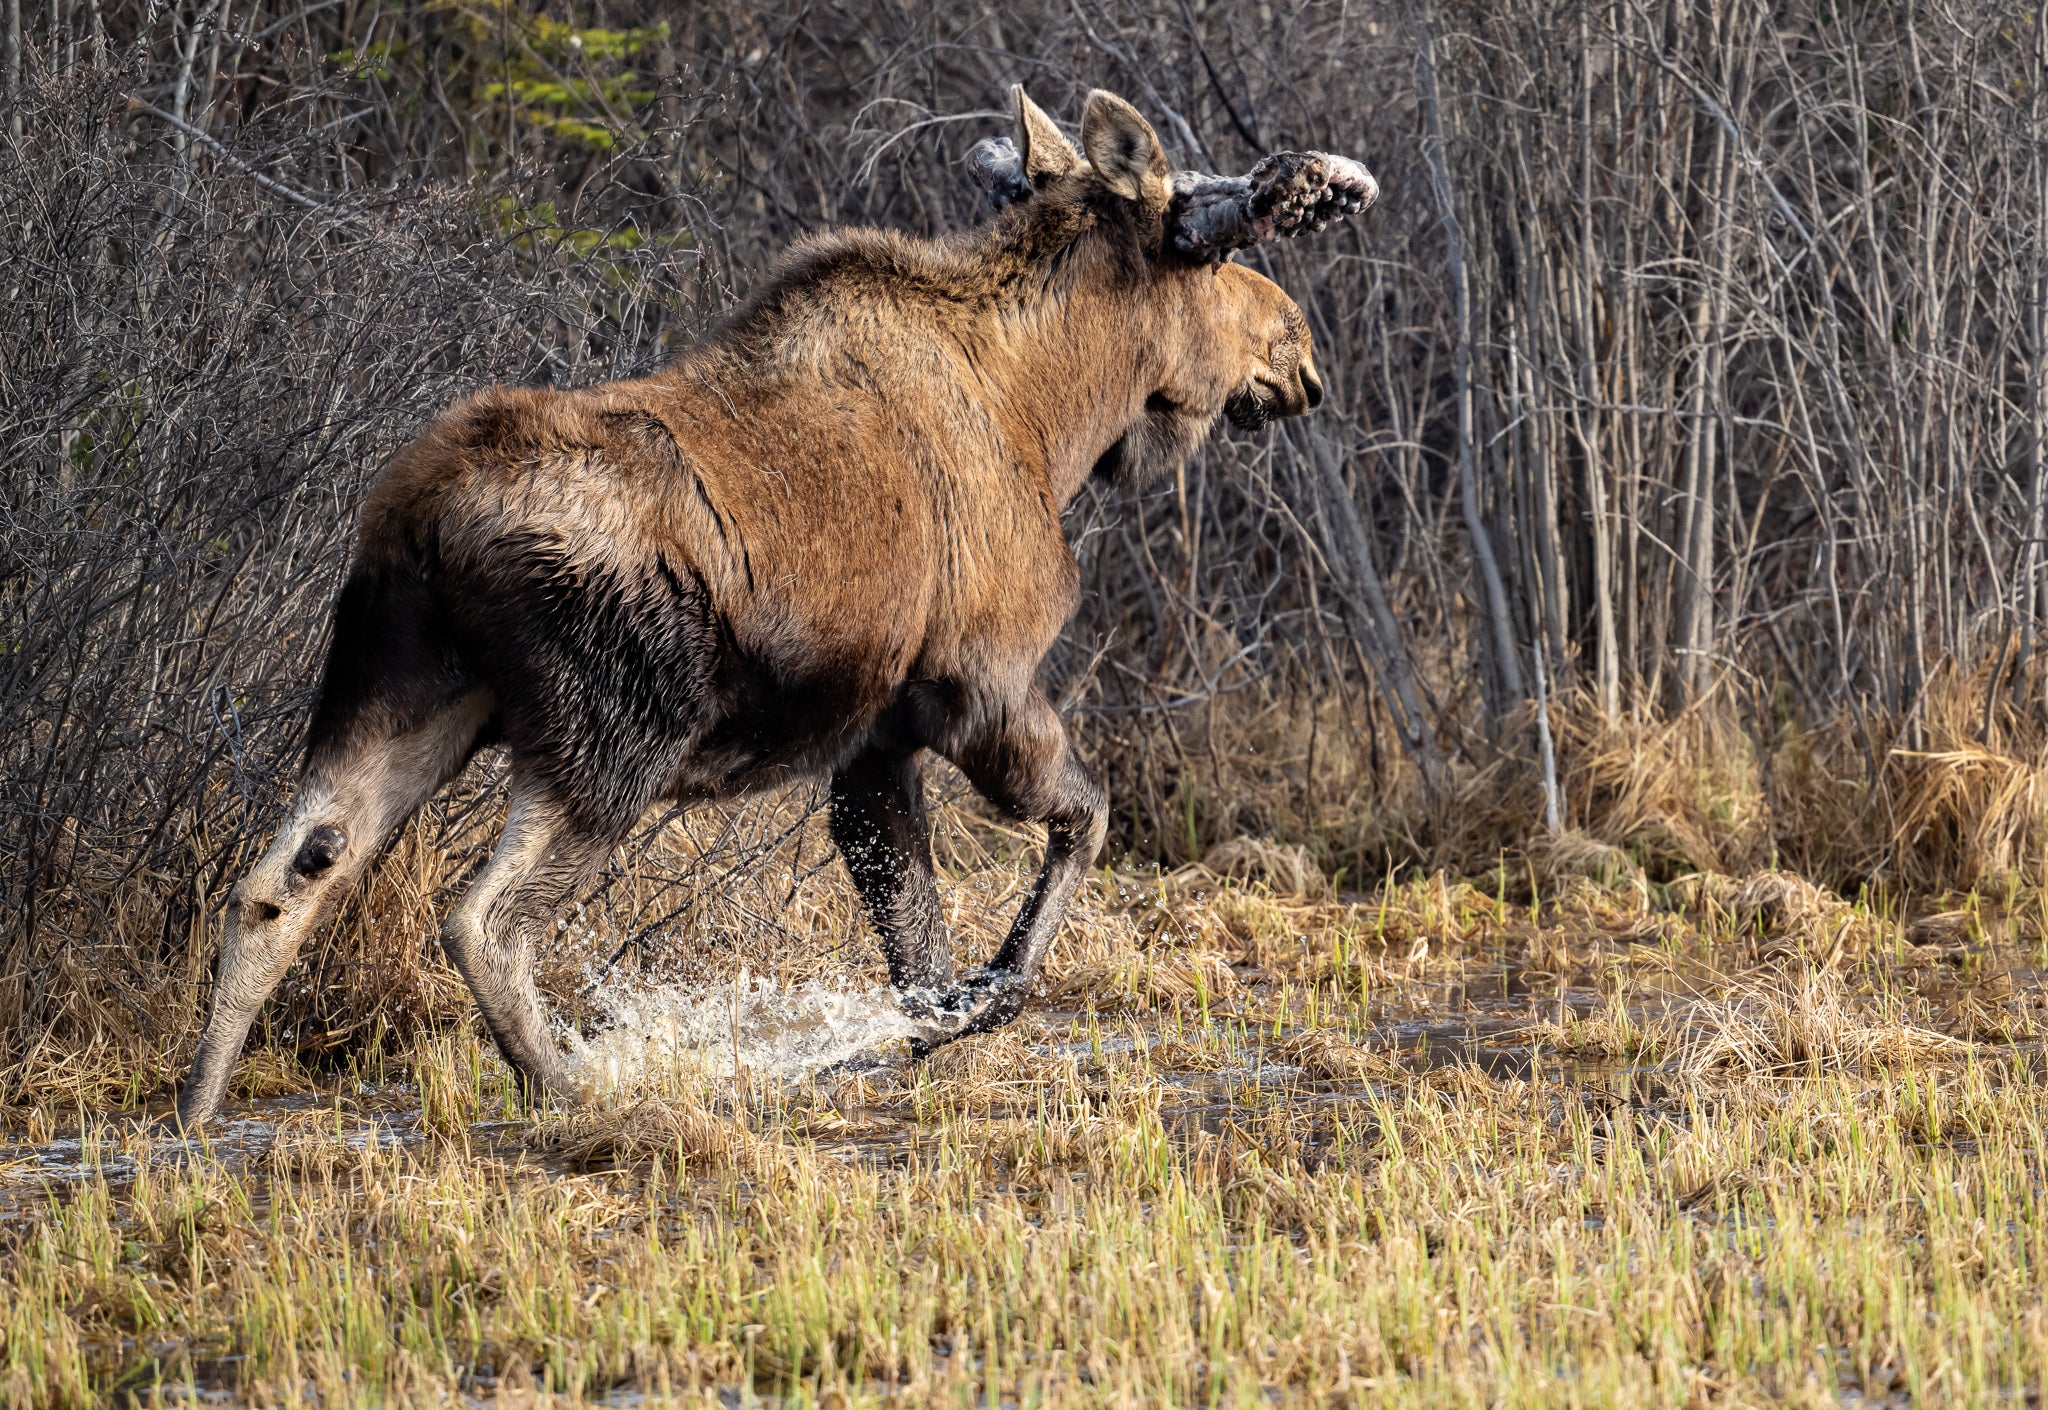 bull moose with misshapen antlers runs towards woods